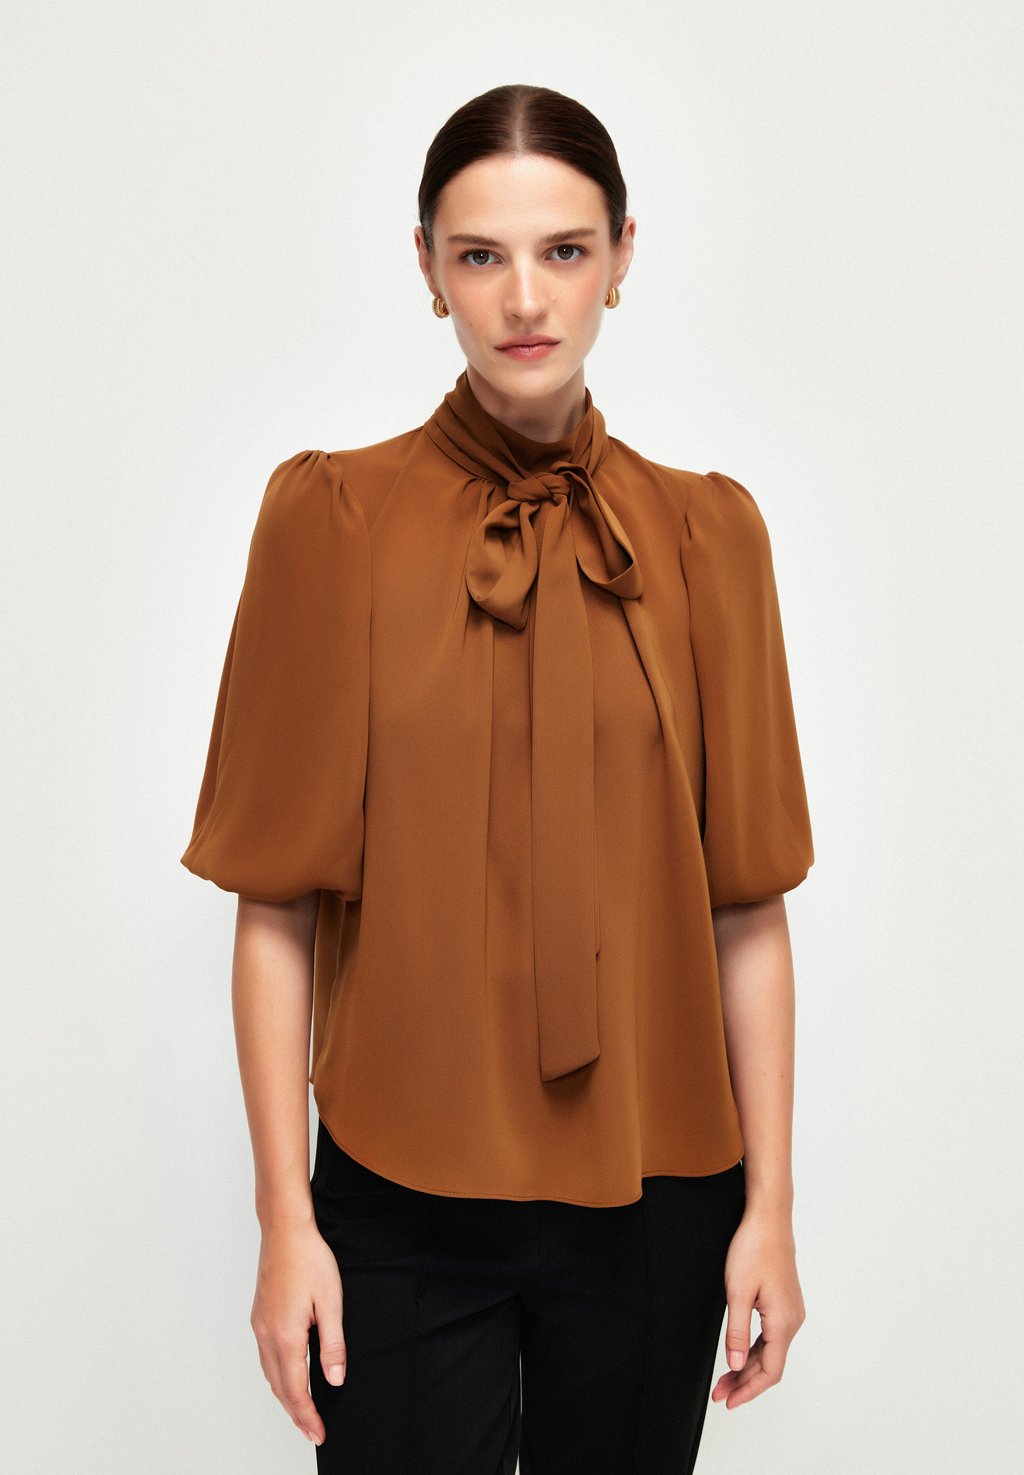 Блузка Holtenneck adL, коричневый блузка adl коричневый мультиколор